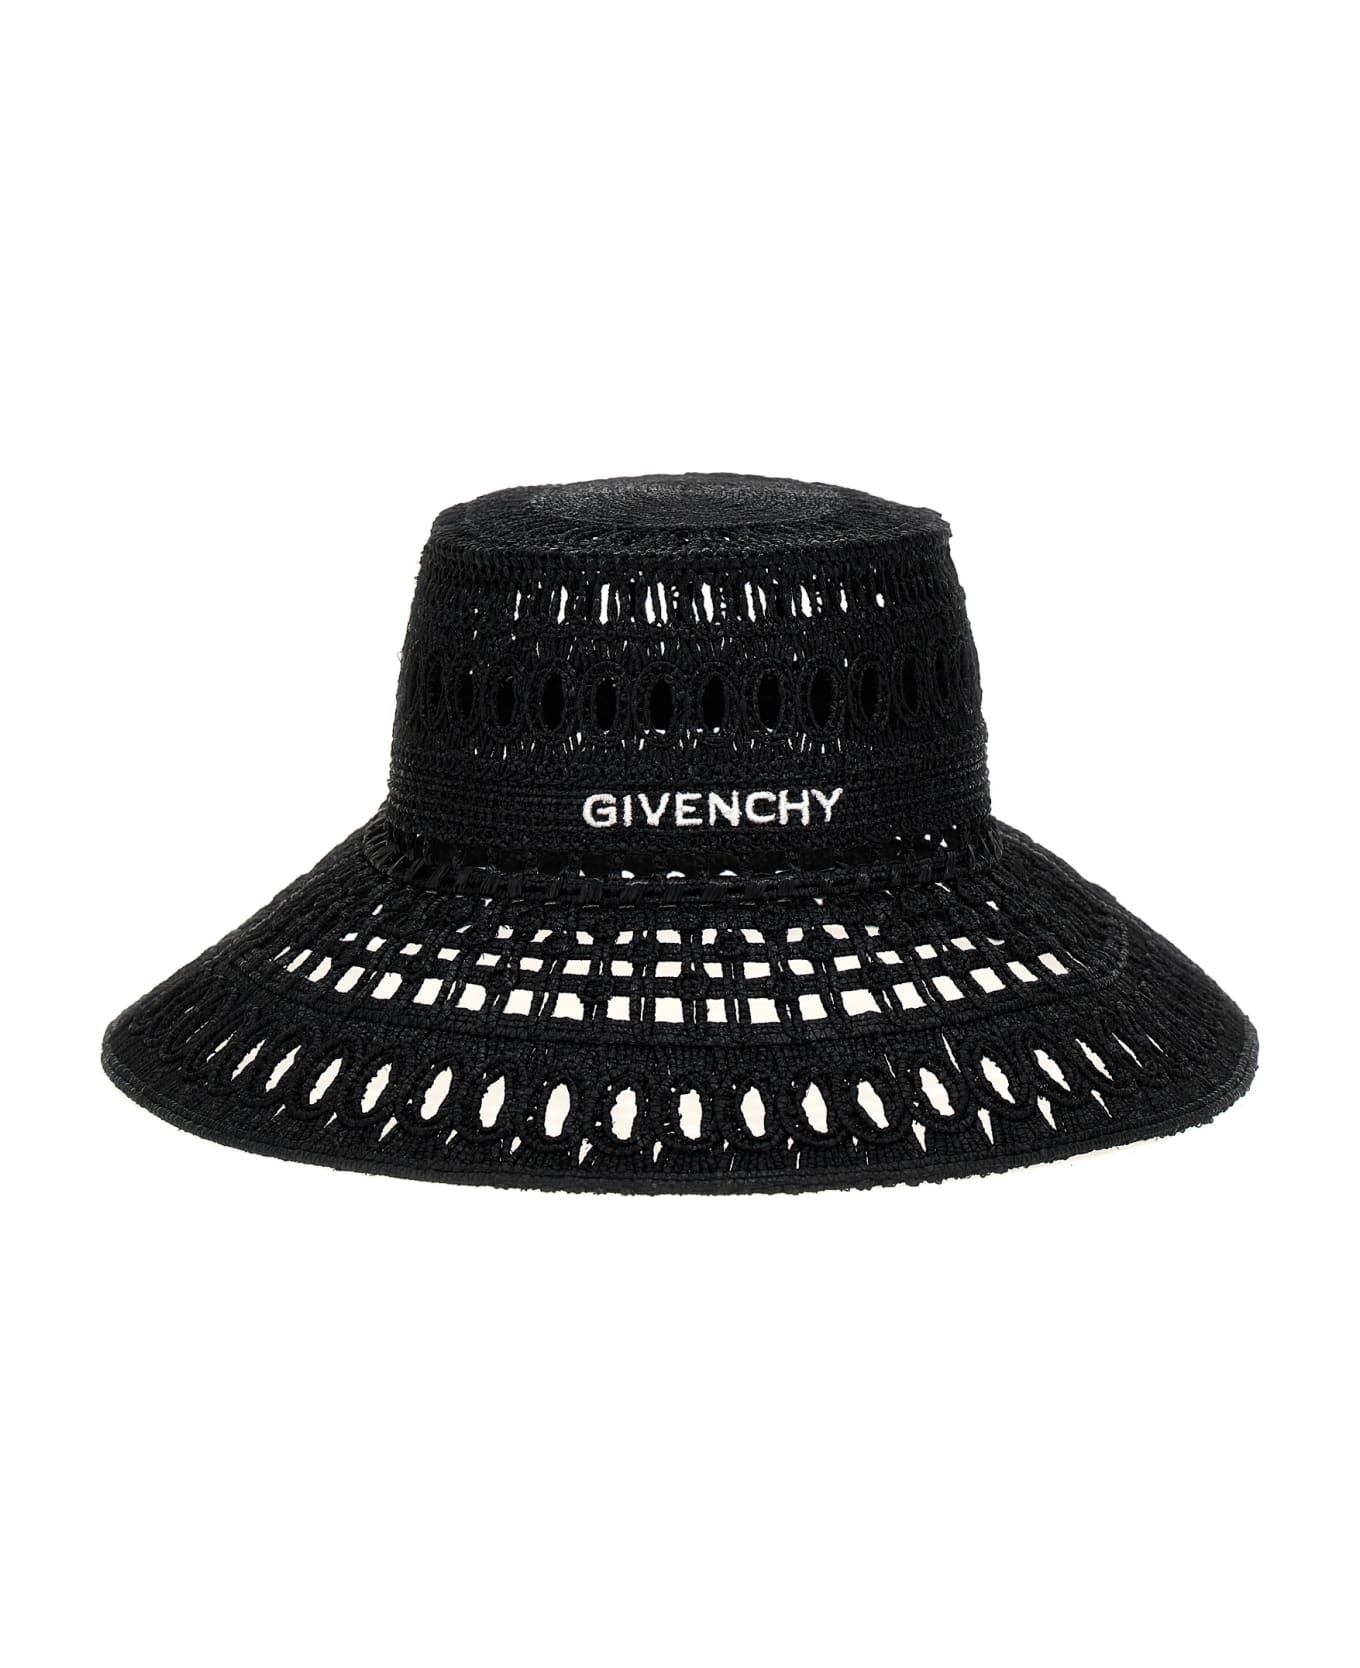 Givenchy Bucket Hat - Black